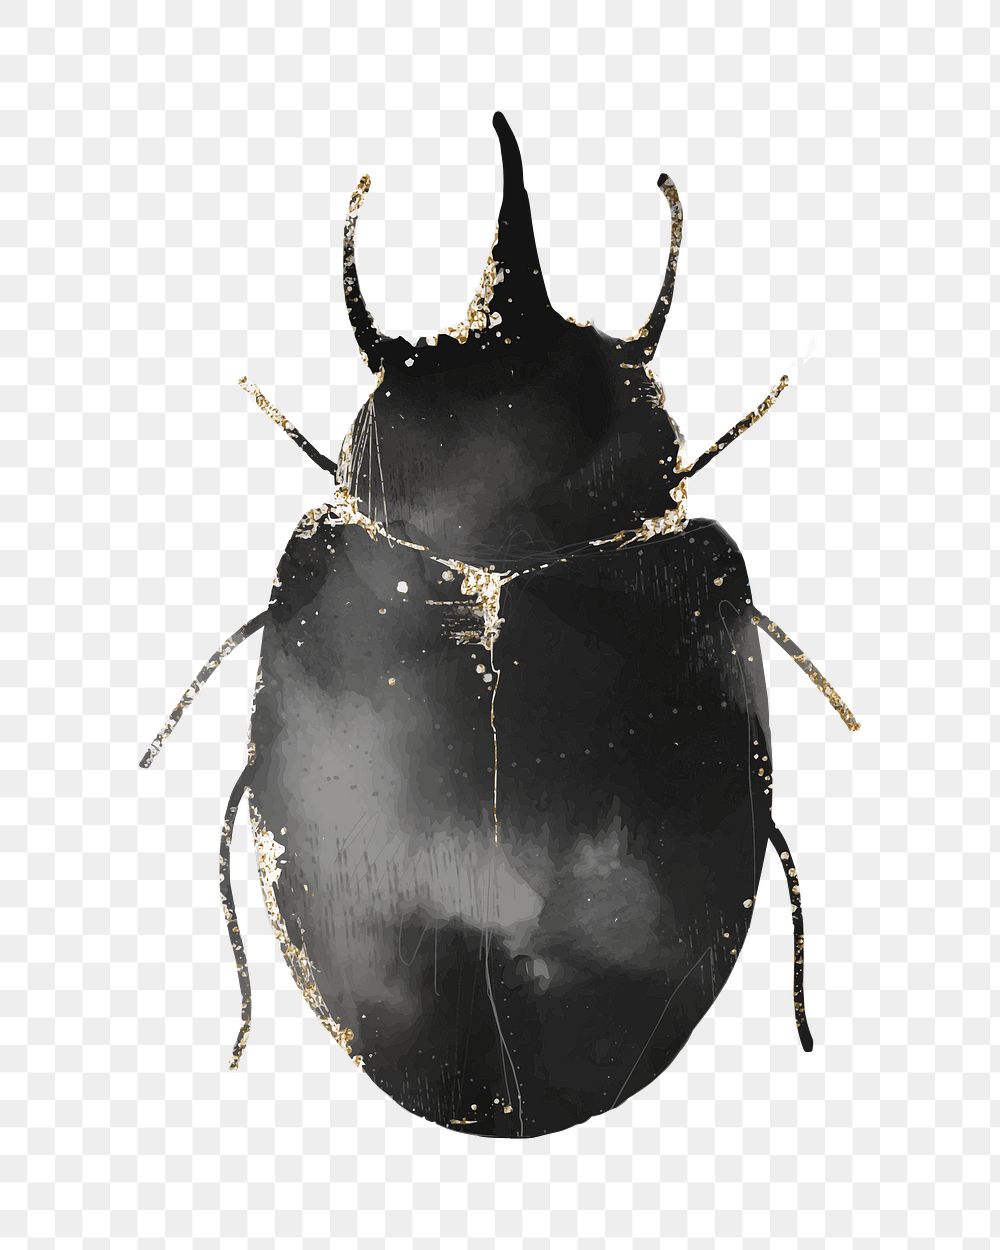 Watercolor Atlas beetle png, transparent background